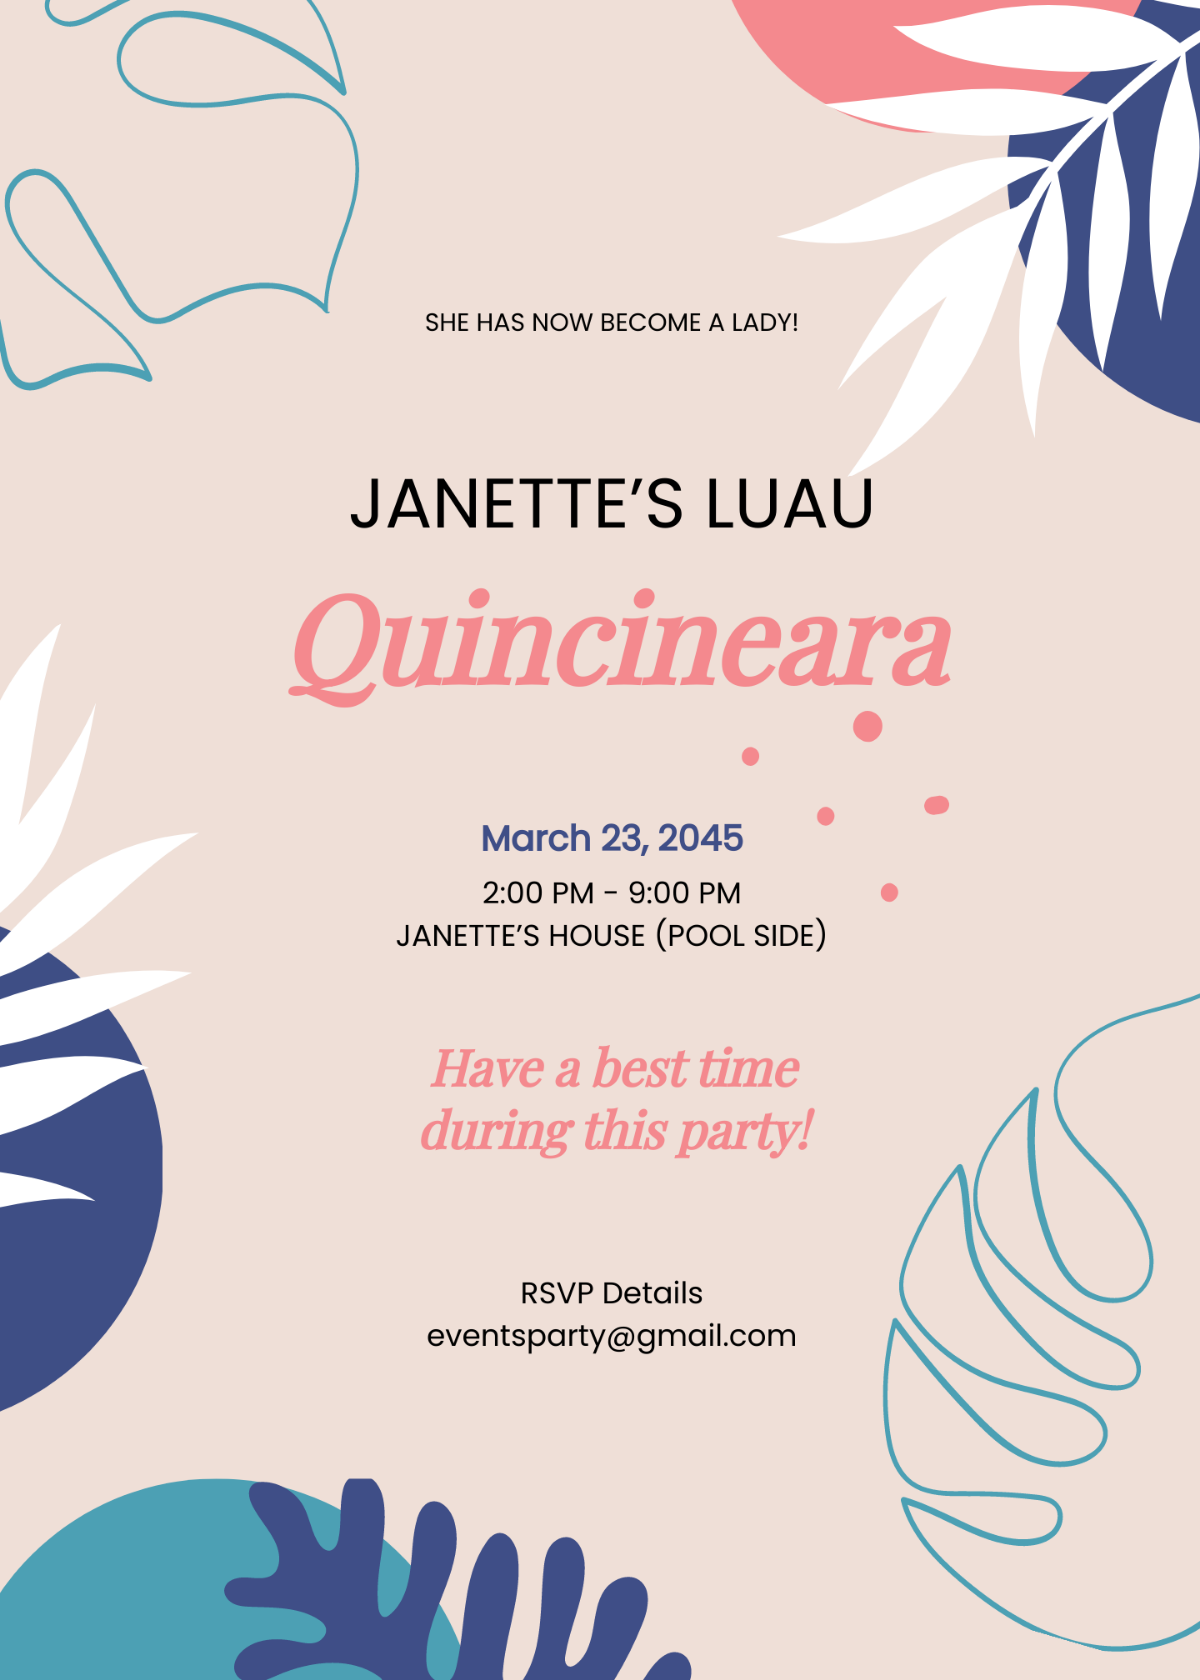 Luau Quincineara Fifteenth Party Invitation